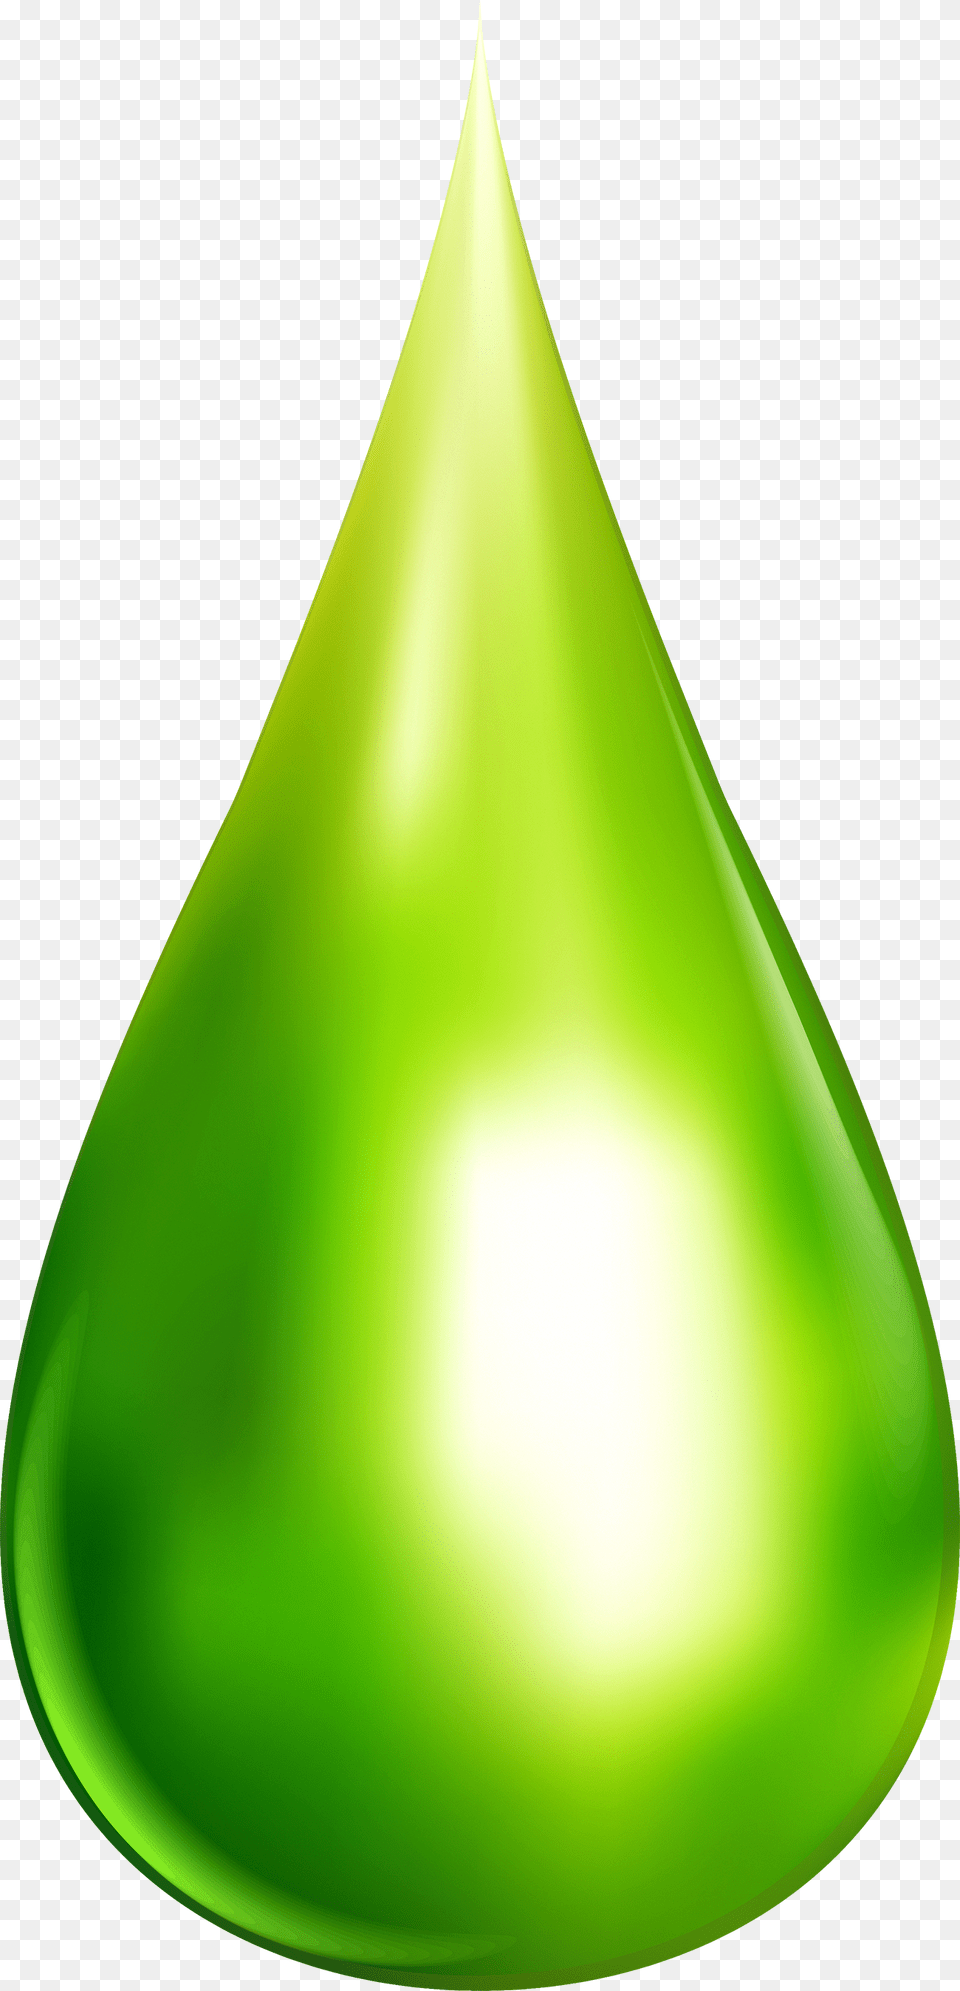 Drop Download Water Dew Green Water Drop Transparent, Droplet, Lighting, Light Free Png